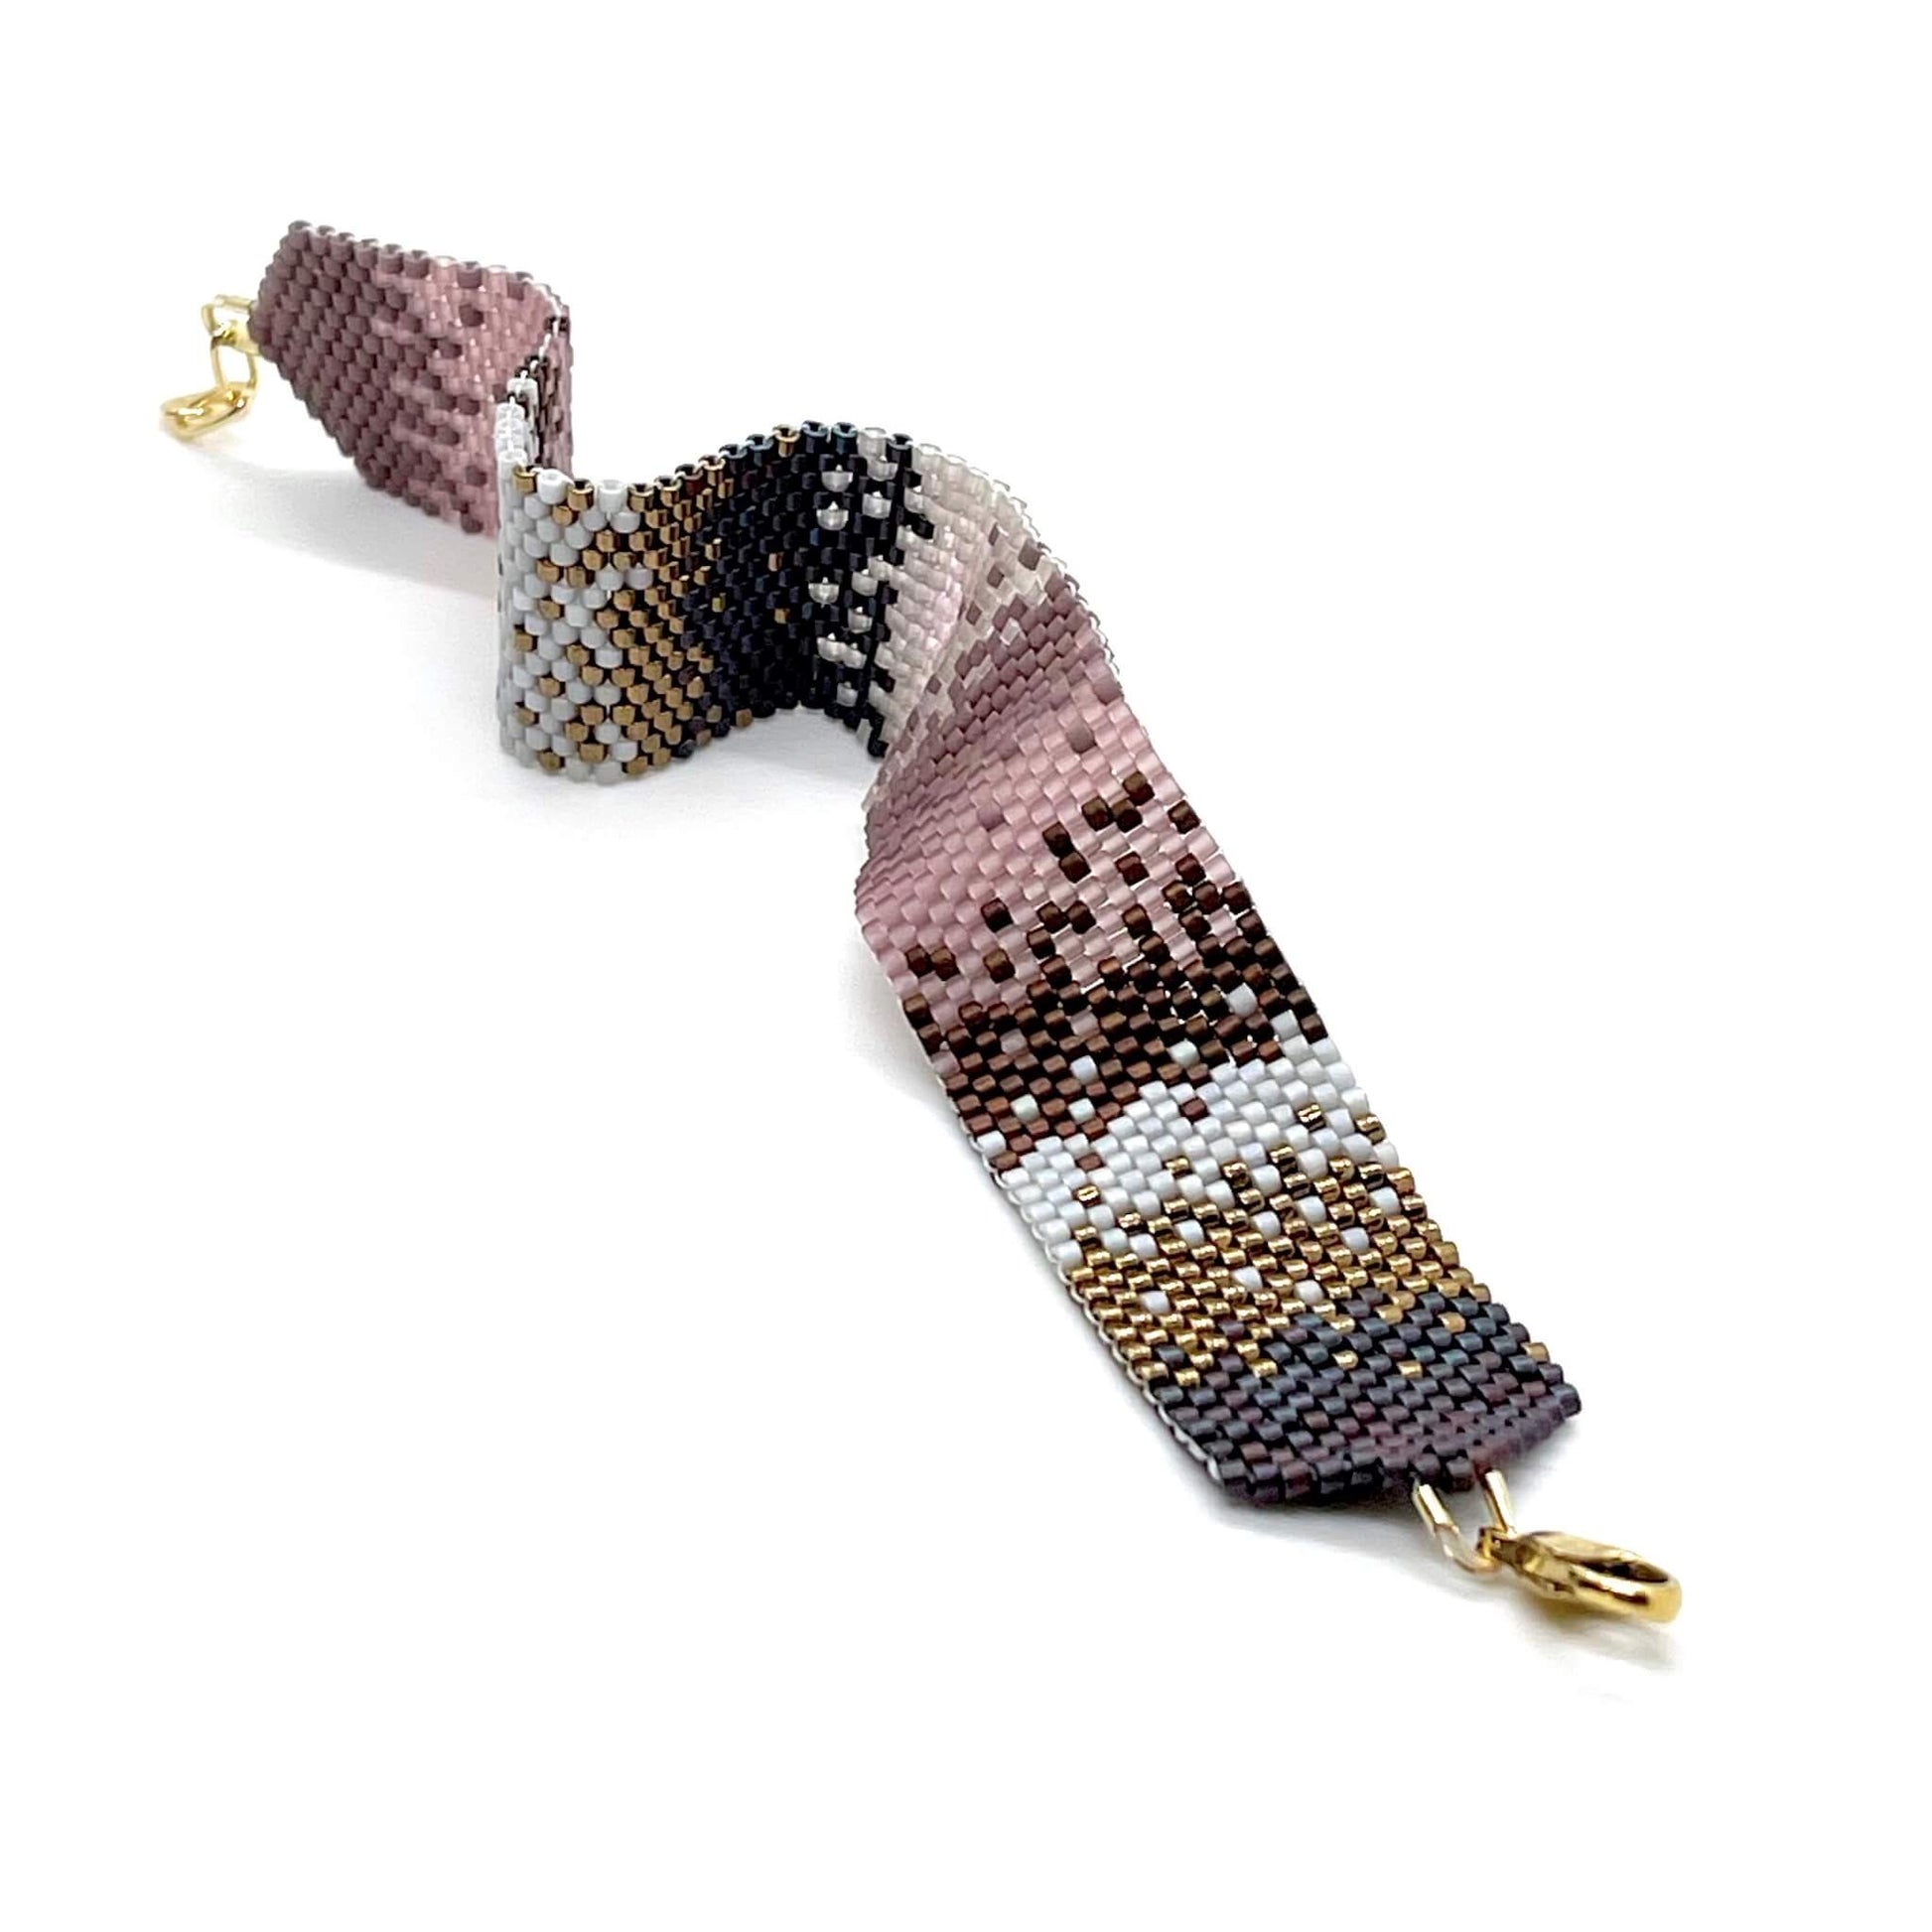 Ombre purple and bronze seed bead peyote cuff bracelet.